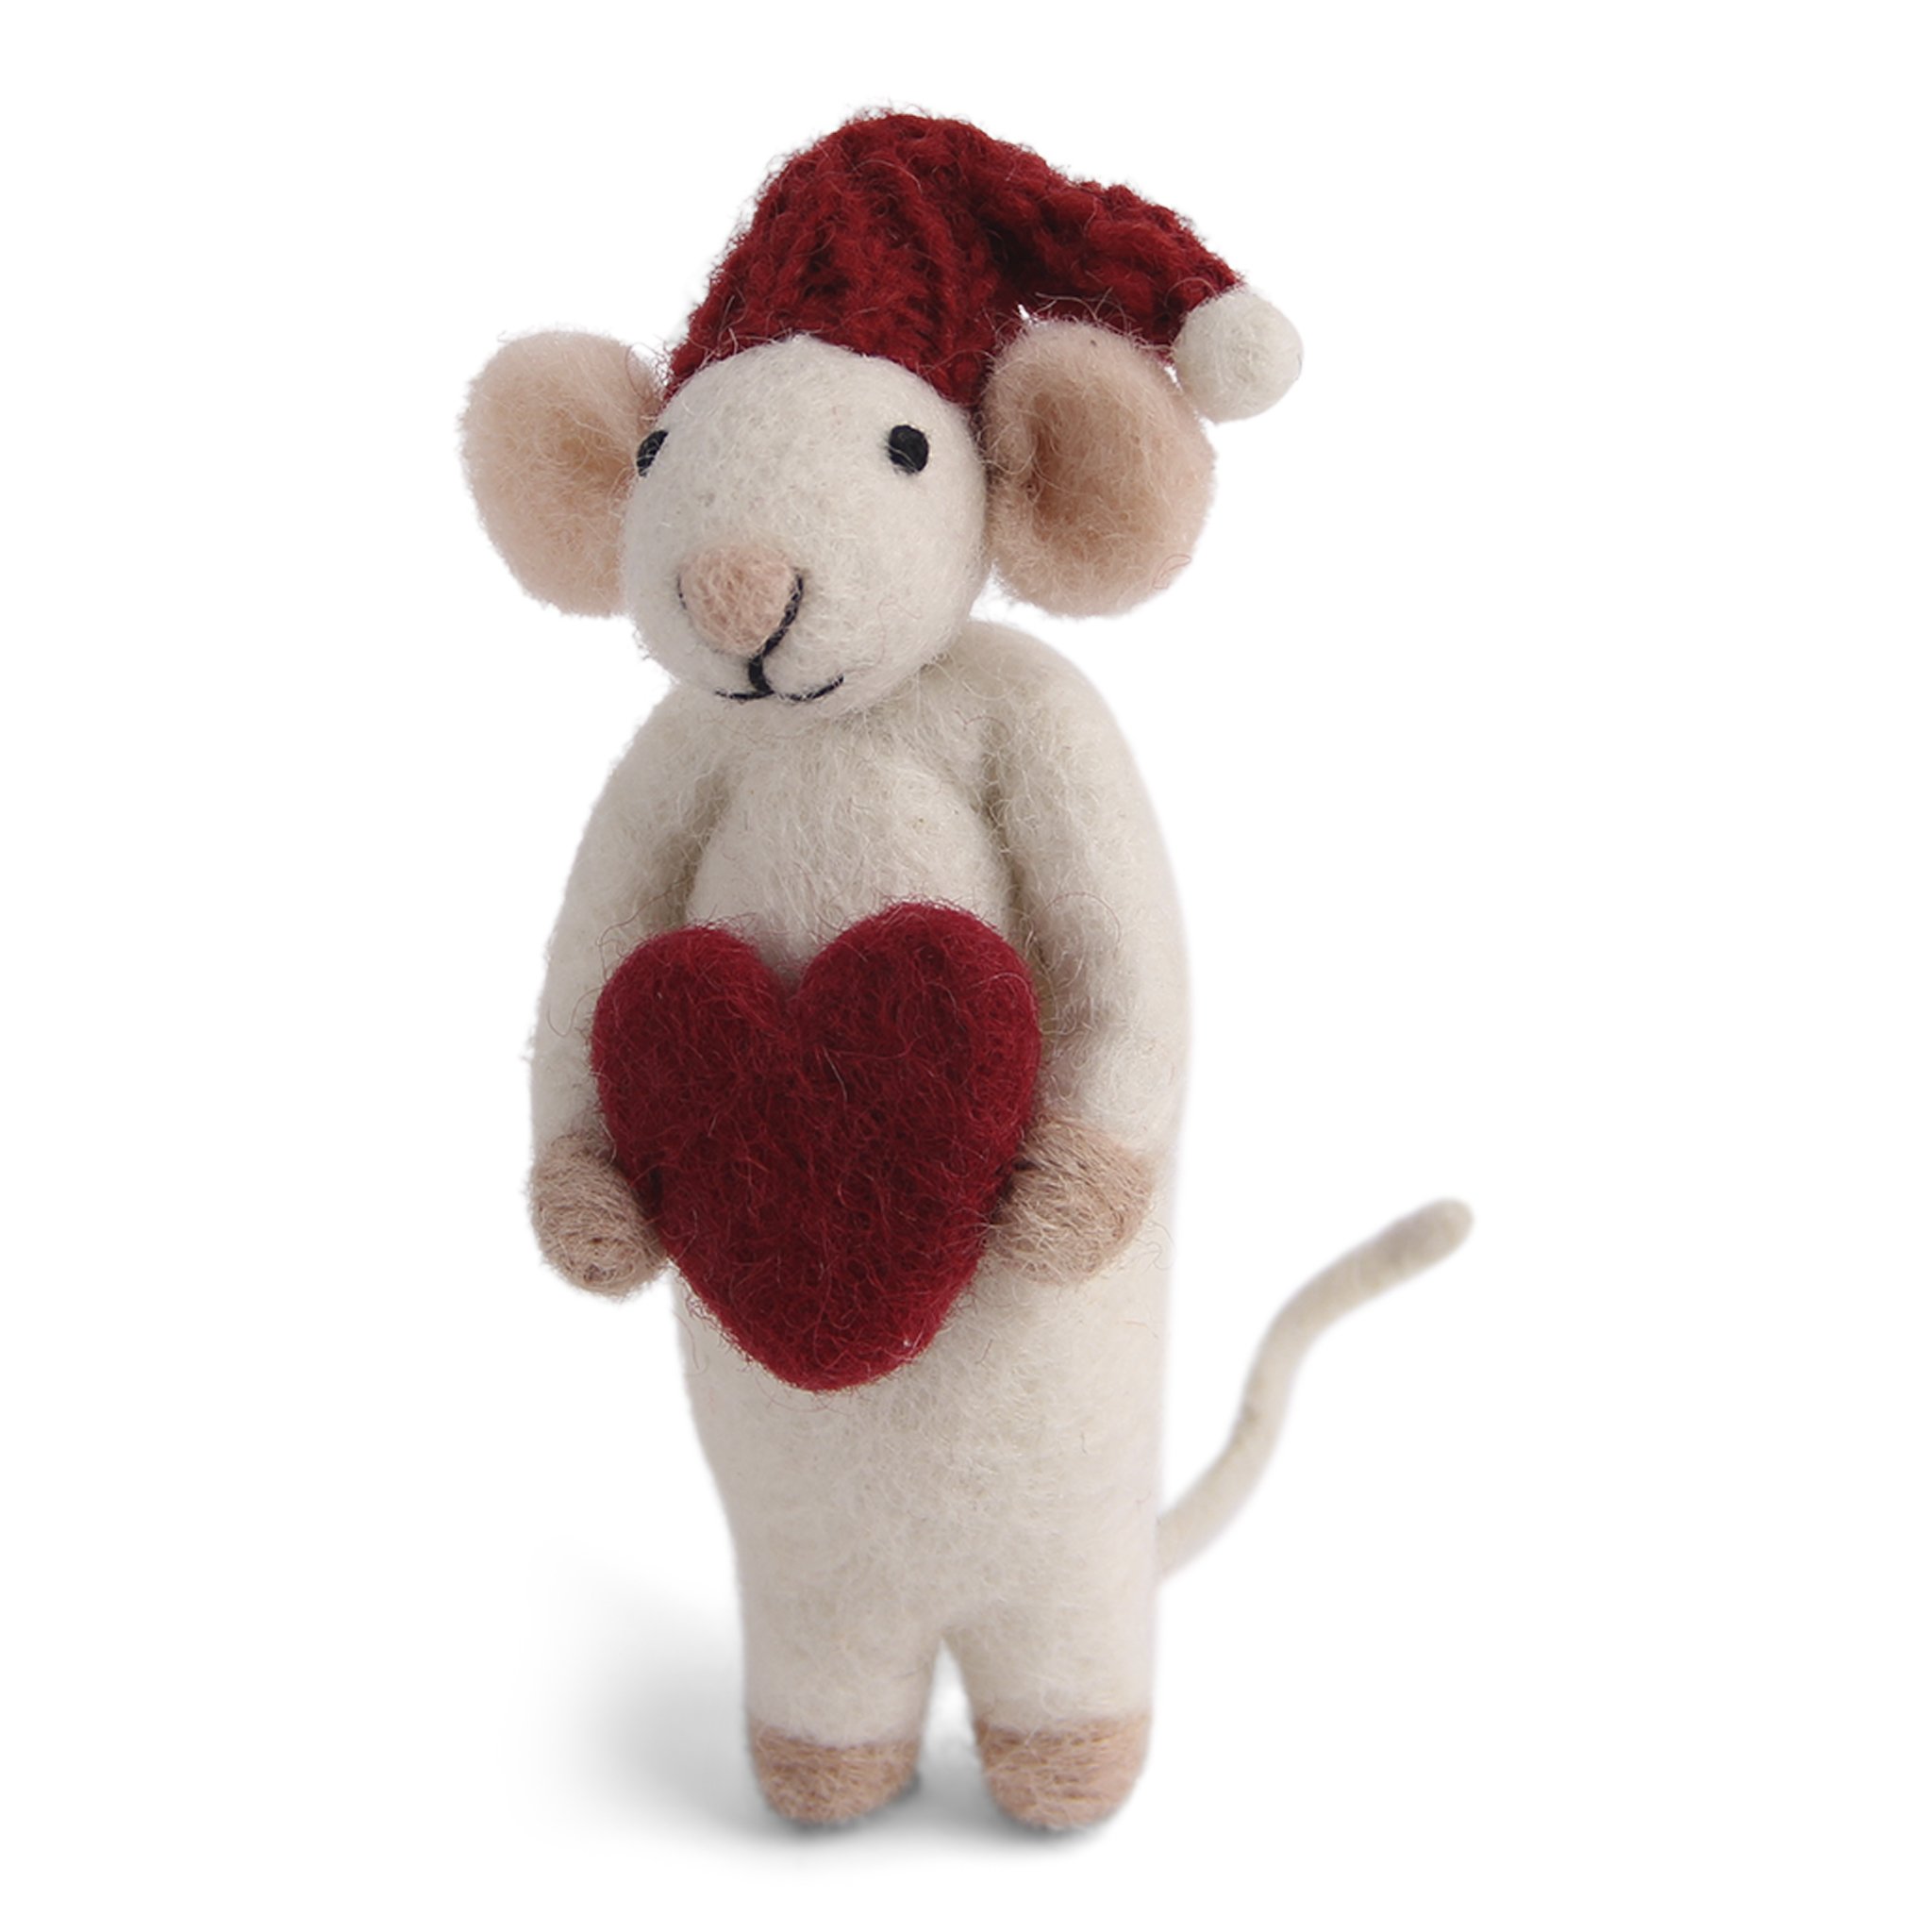 Filtet hvid mus med hjerte fra Gry & Sif, 13 cm